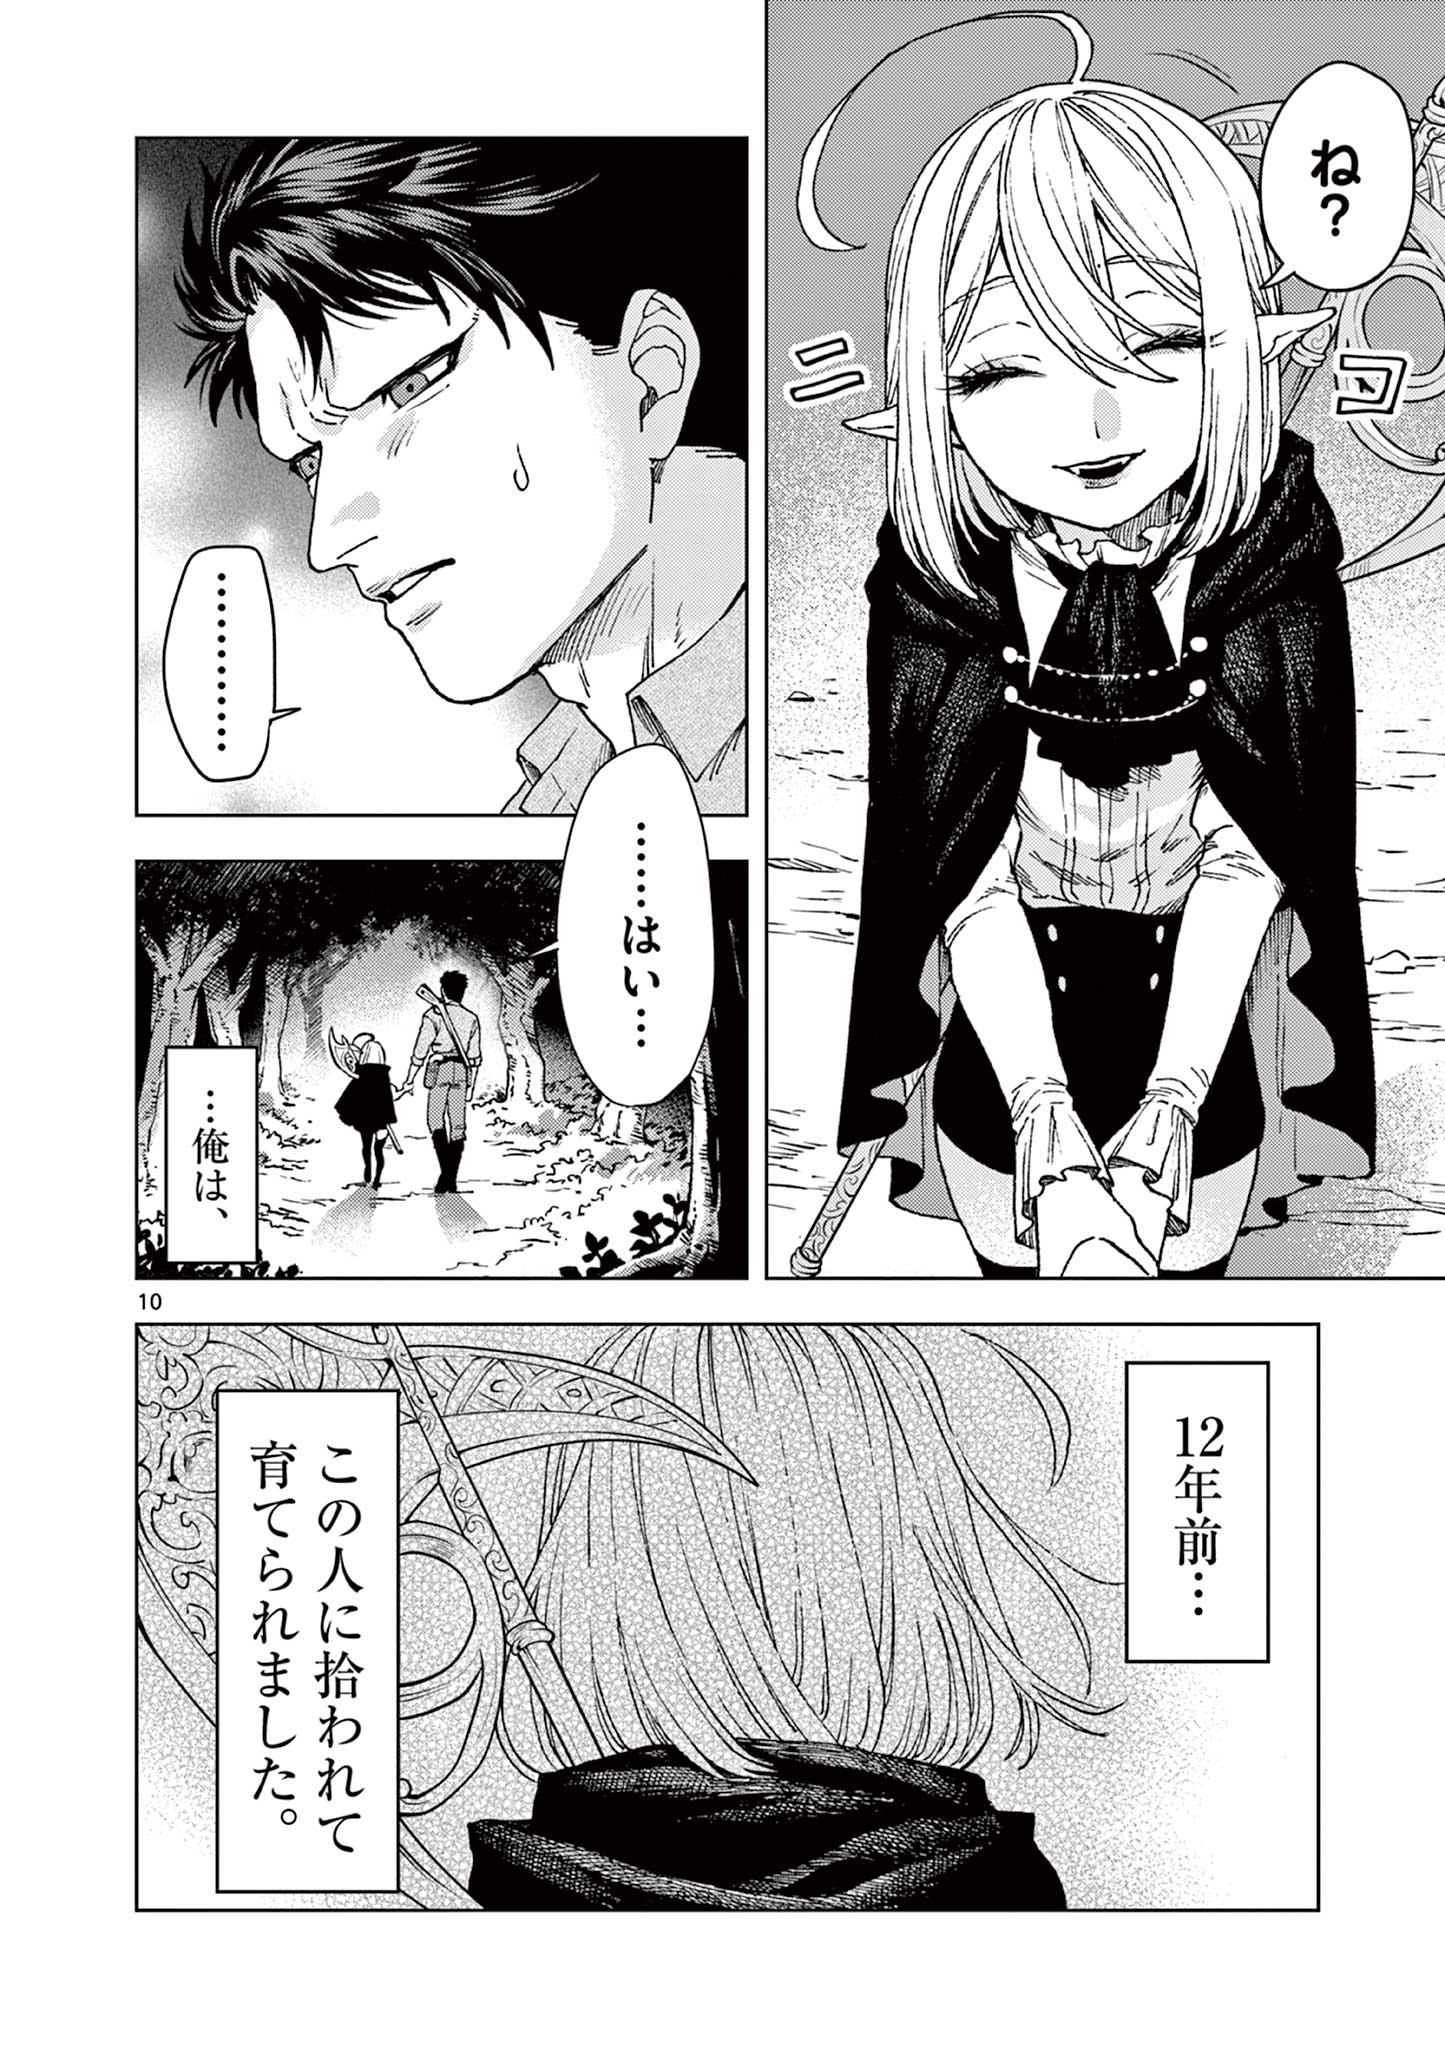 Raul to Kyuuketsuki - Chapter 1 - Page 10